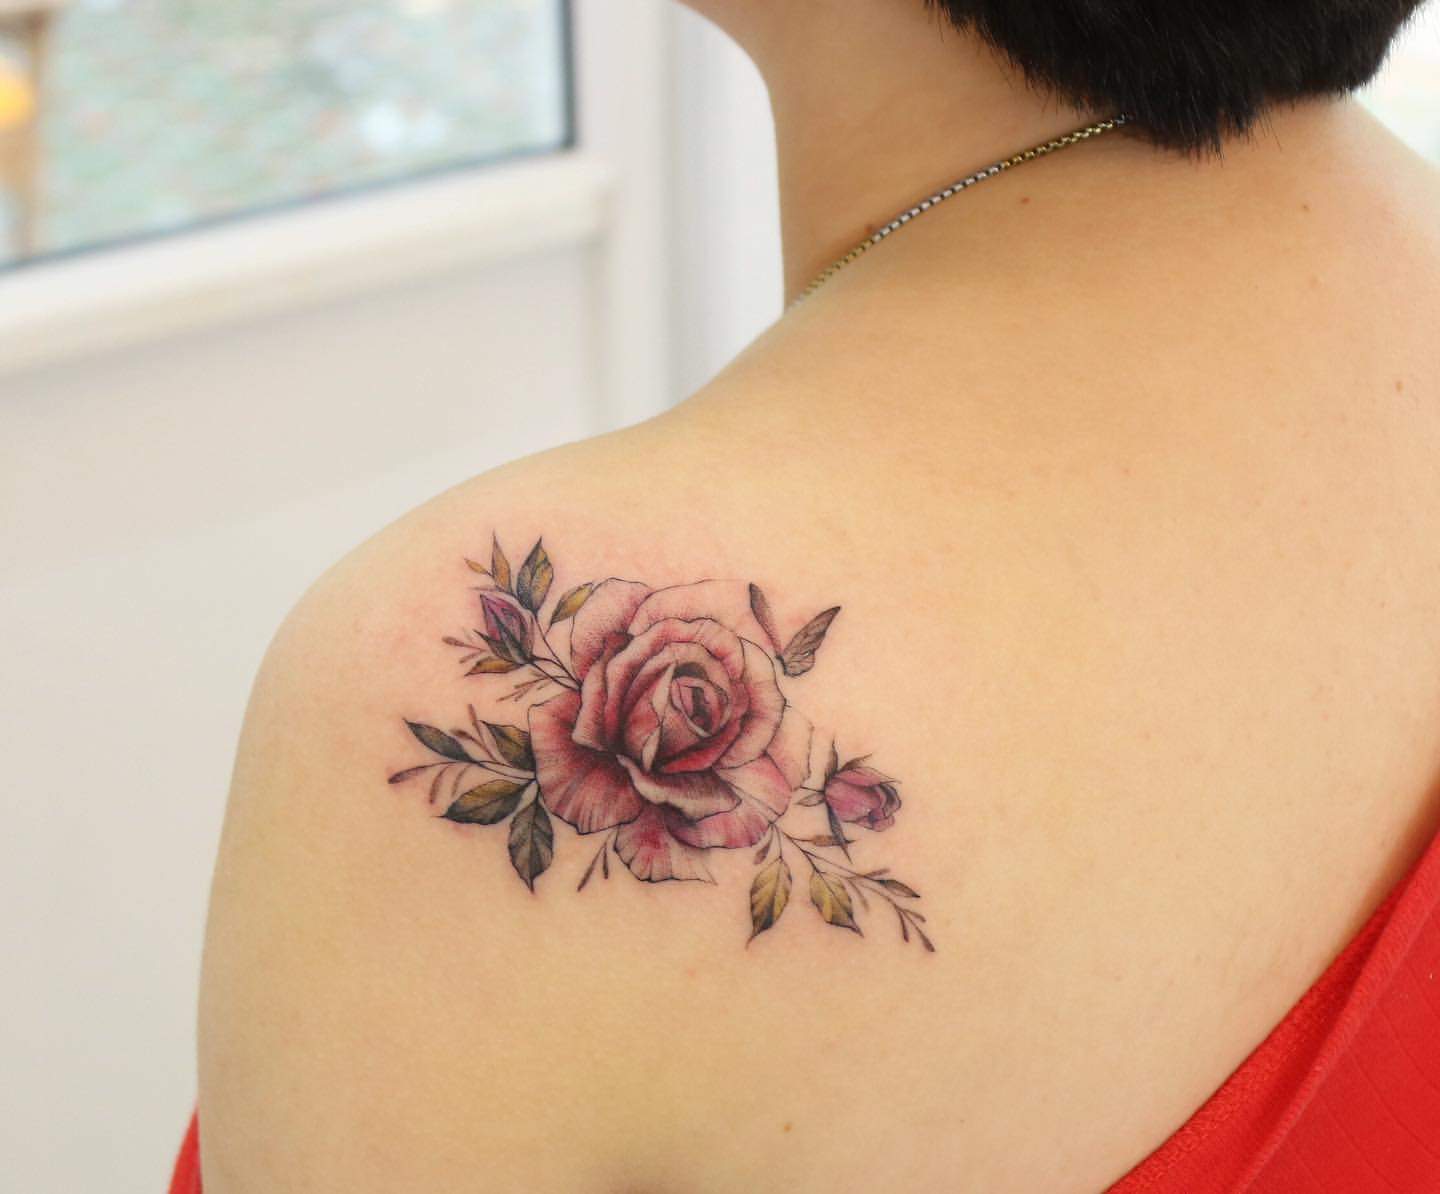 Buy Choose Love Roses Tattoo Fake Flower Tattoo for Girl Online in India   Etsy